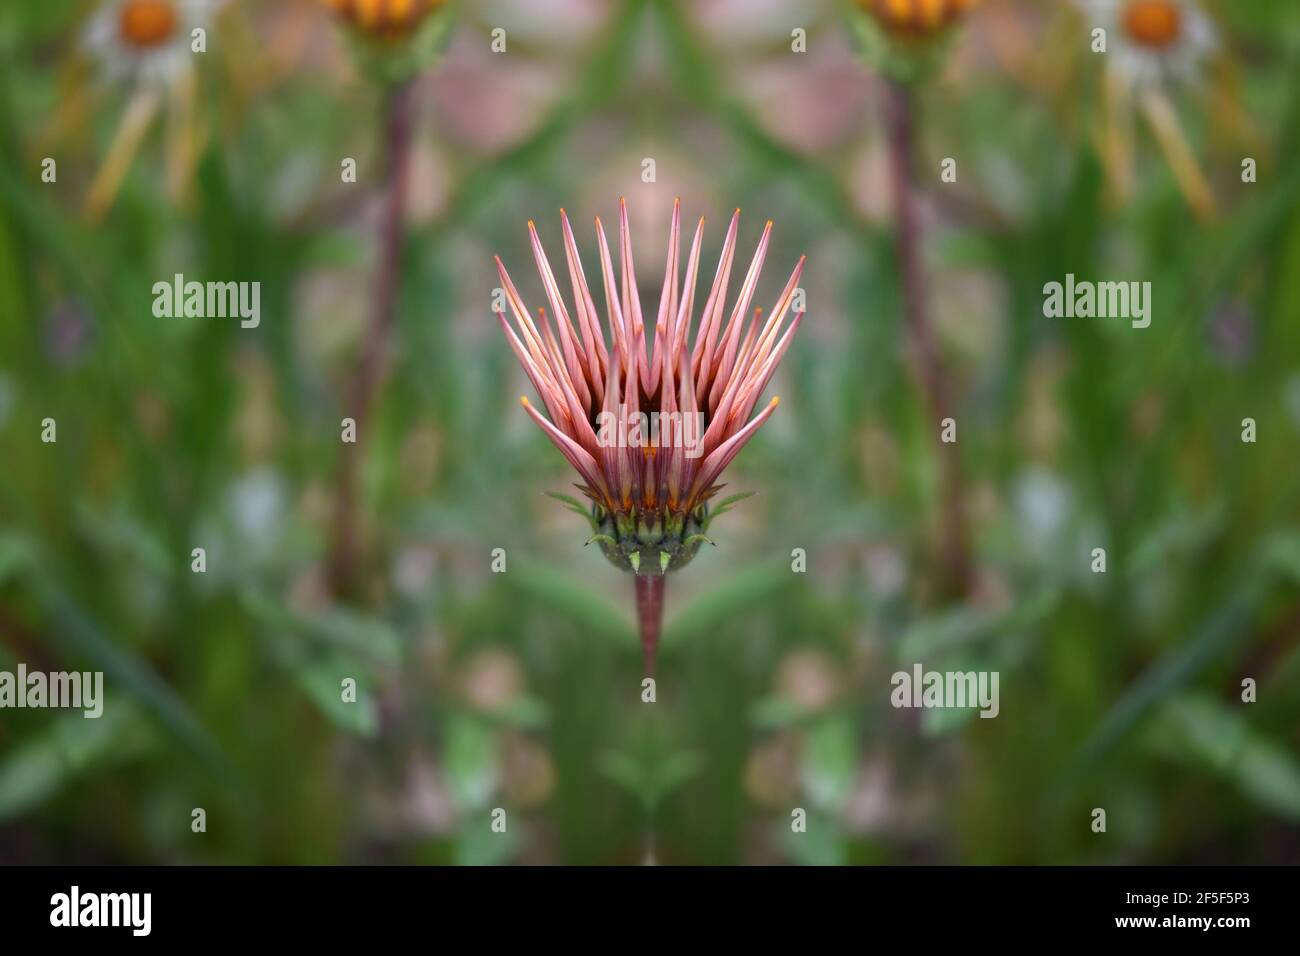 Gazania daisy on a natural green background. Stock Photo